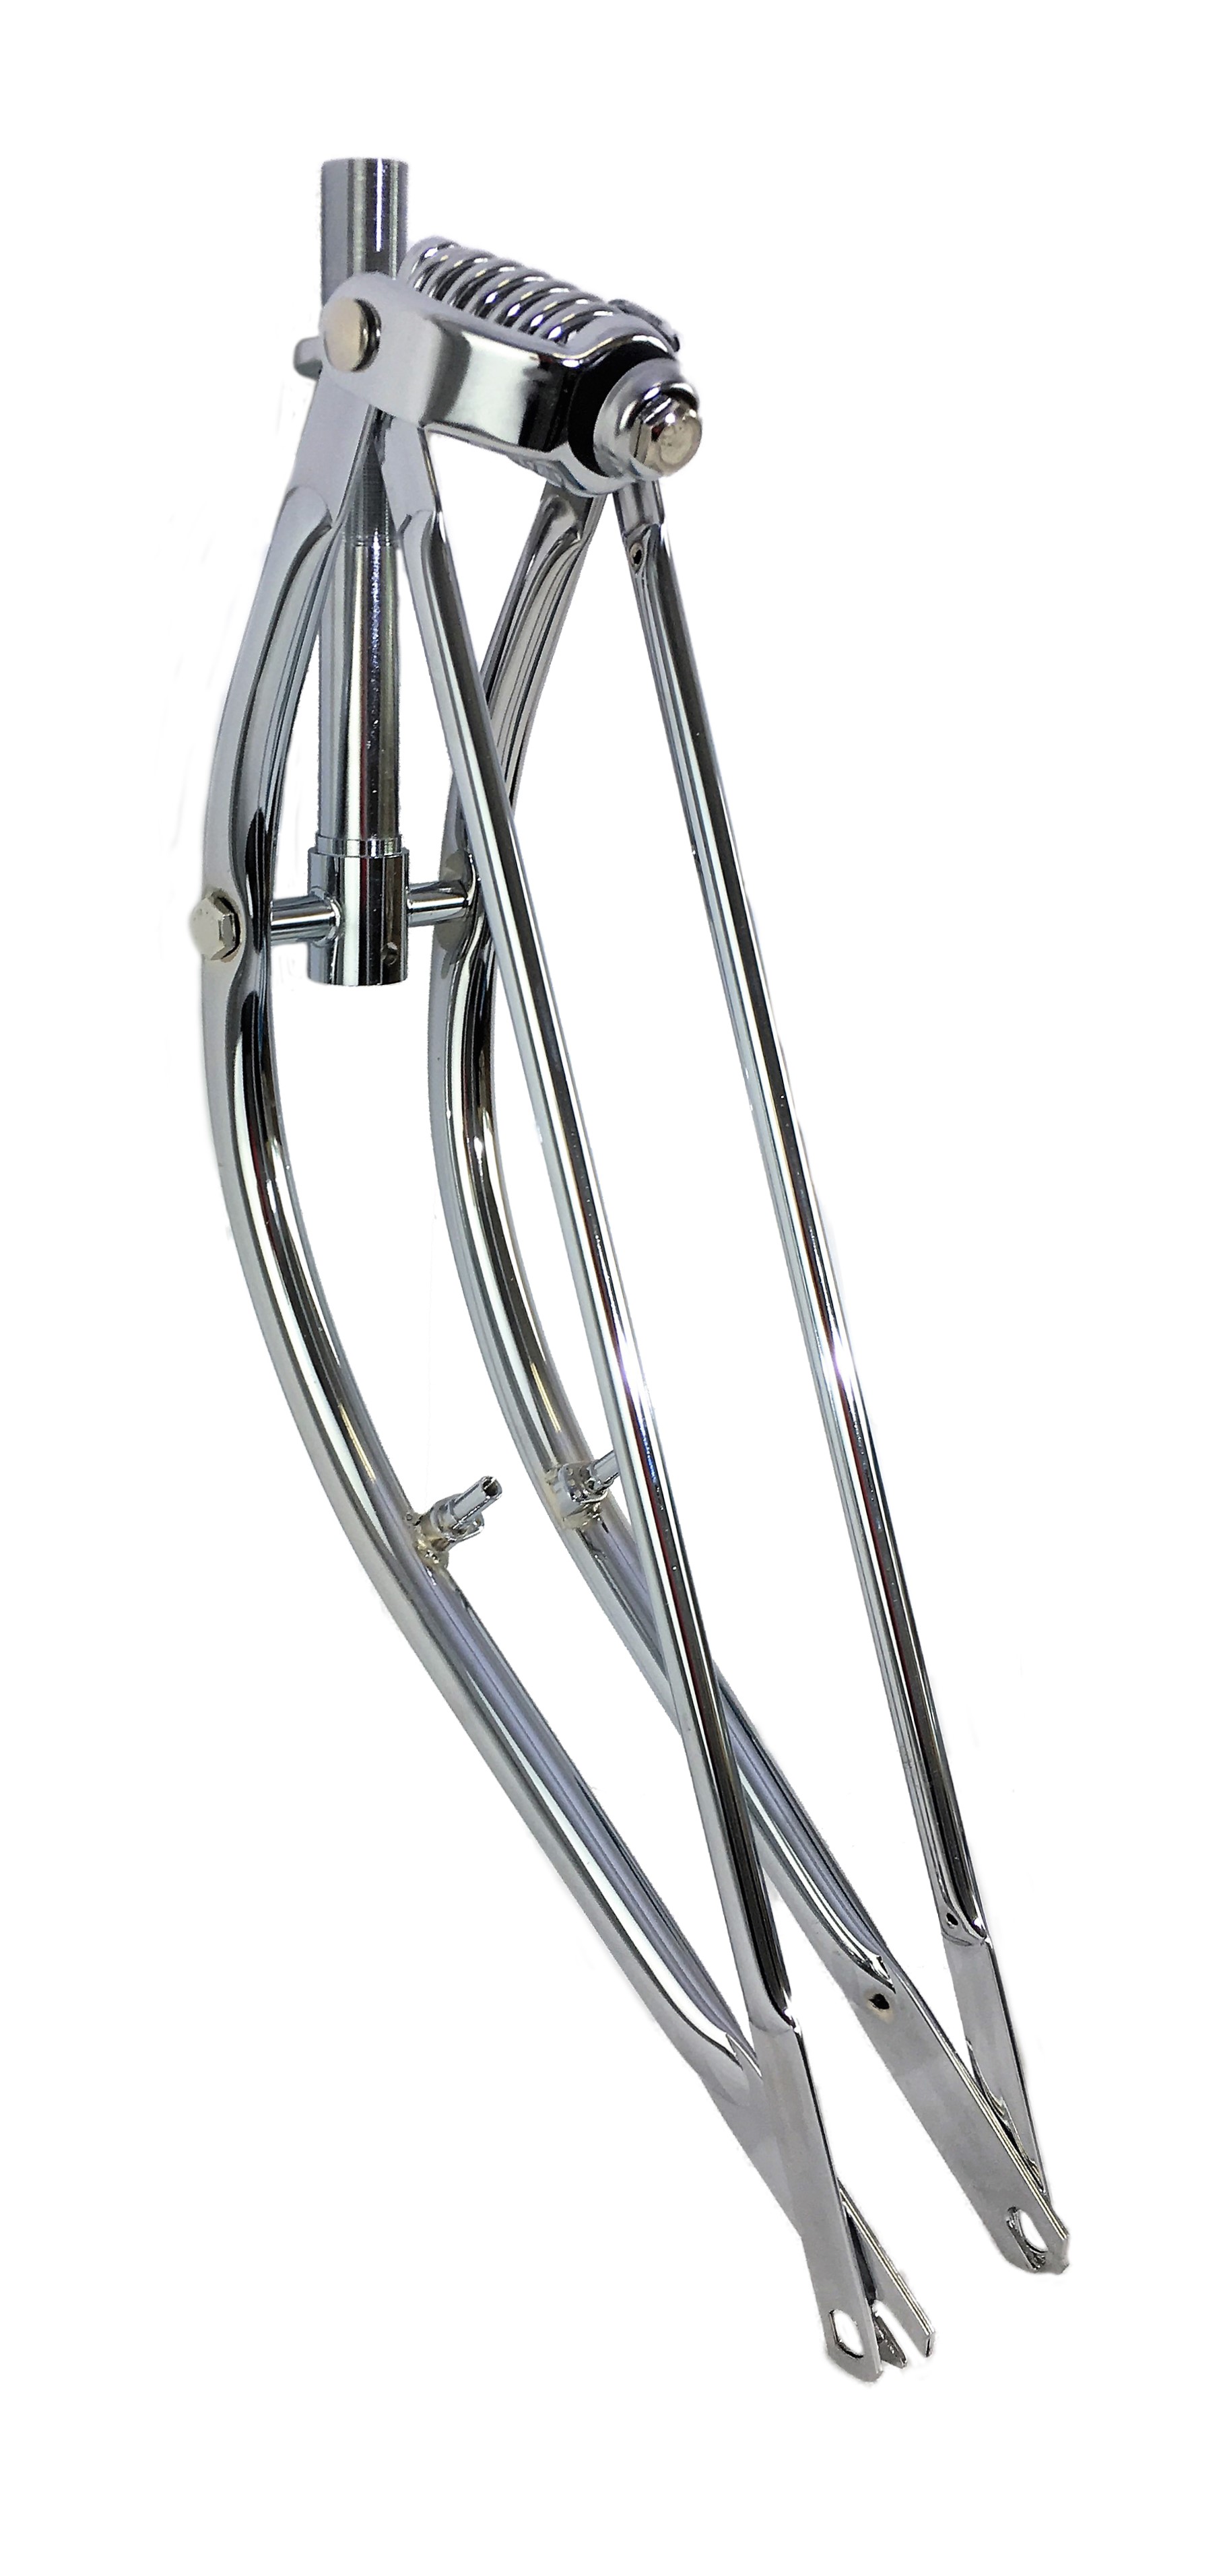 Bent Springer Fork 26 inch. for Cantilevers/V-Brakes, 1 1/8 steerer